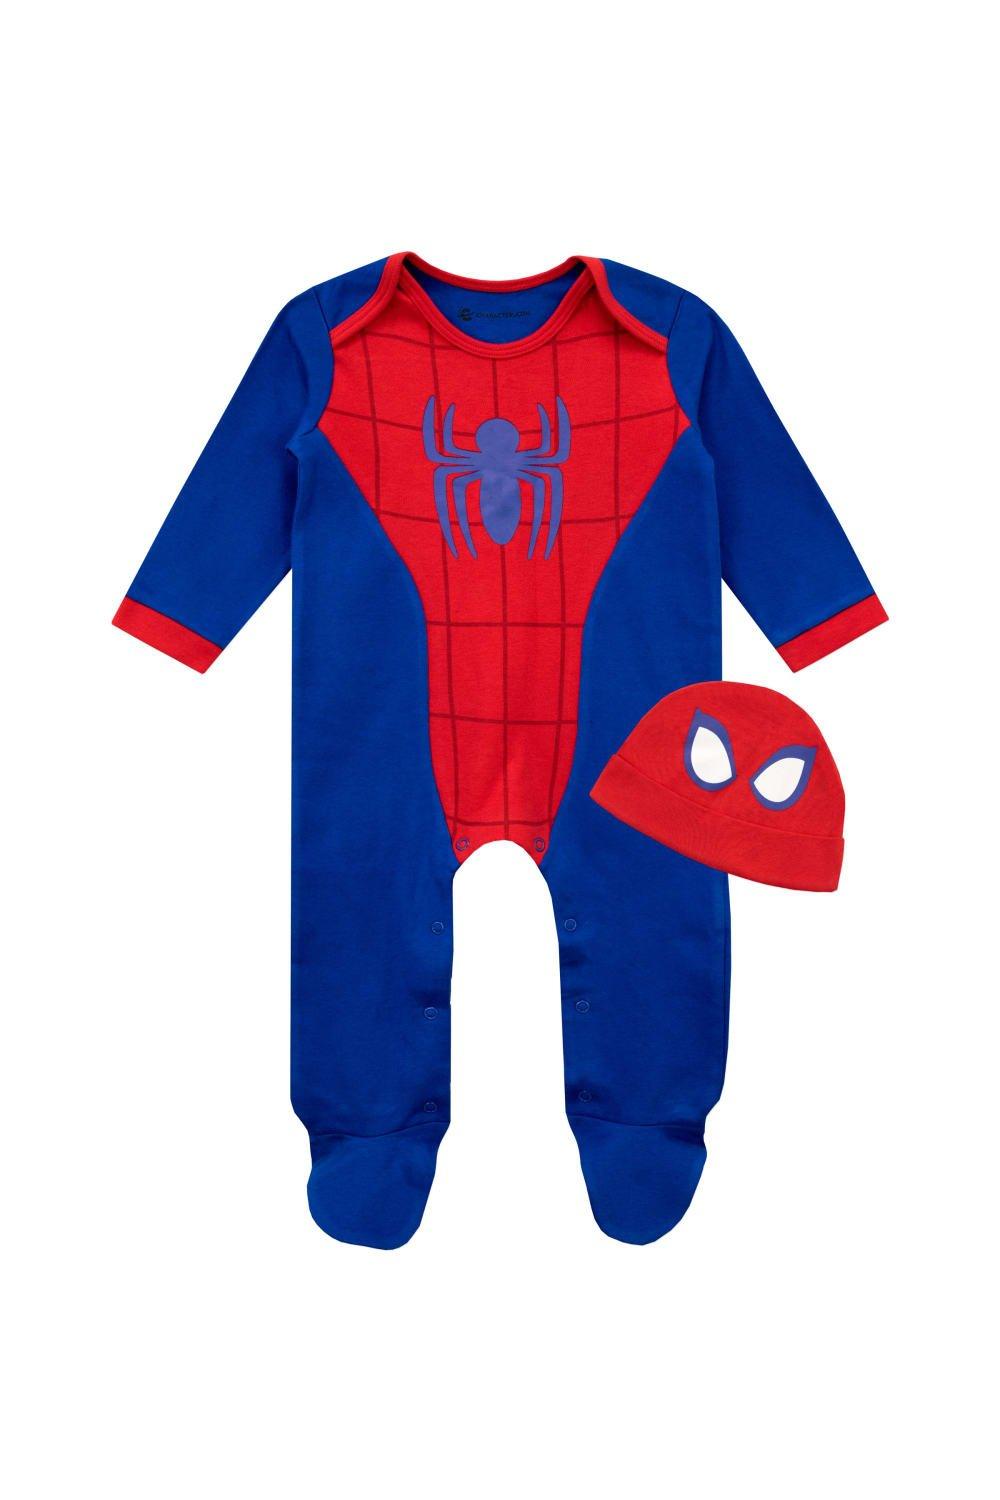 Baby Spiderman Sleepsuit and Hat Set